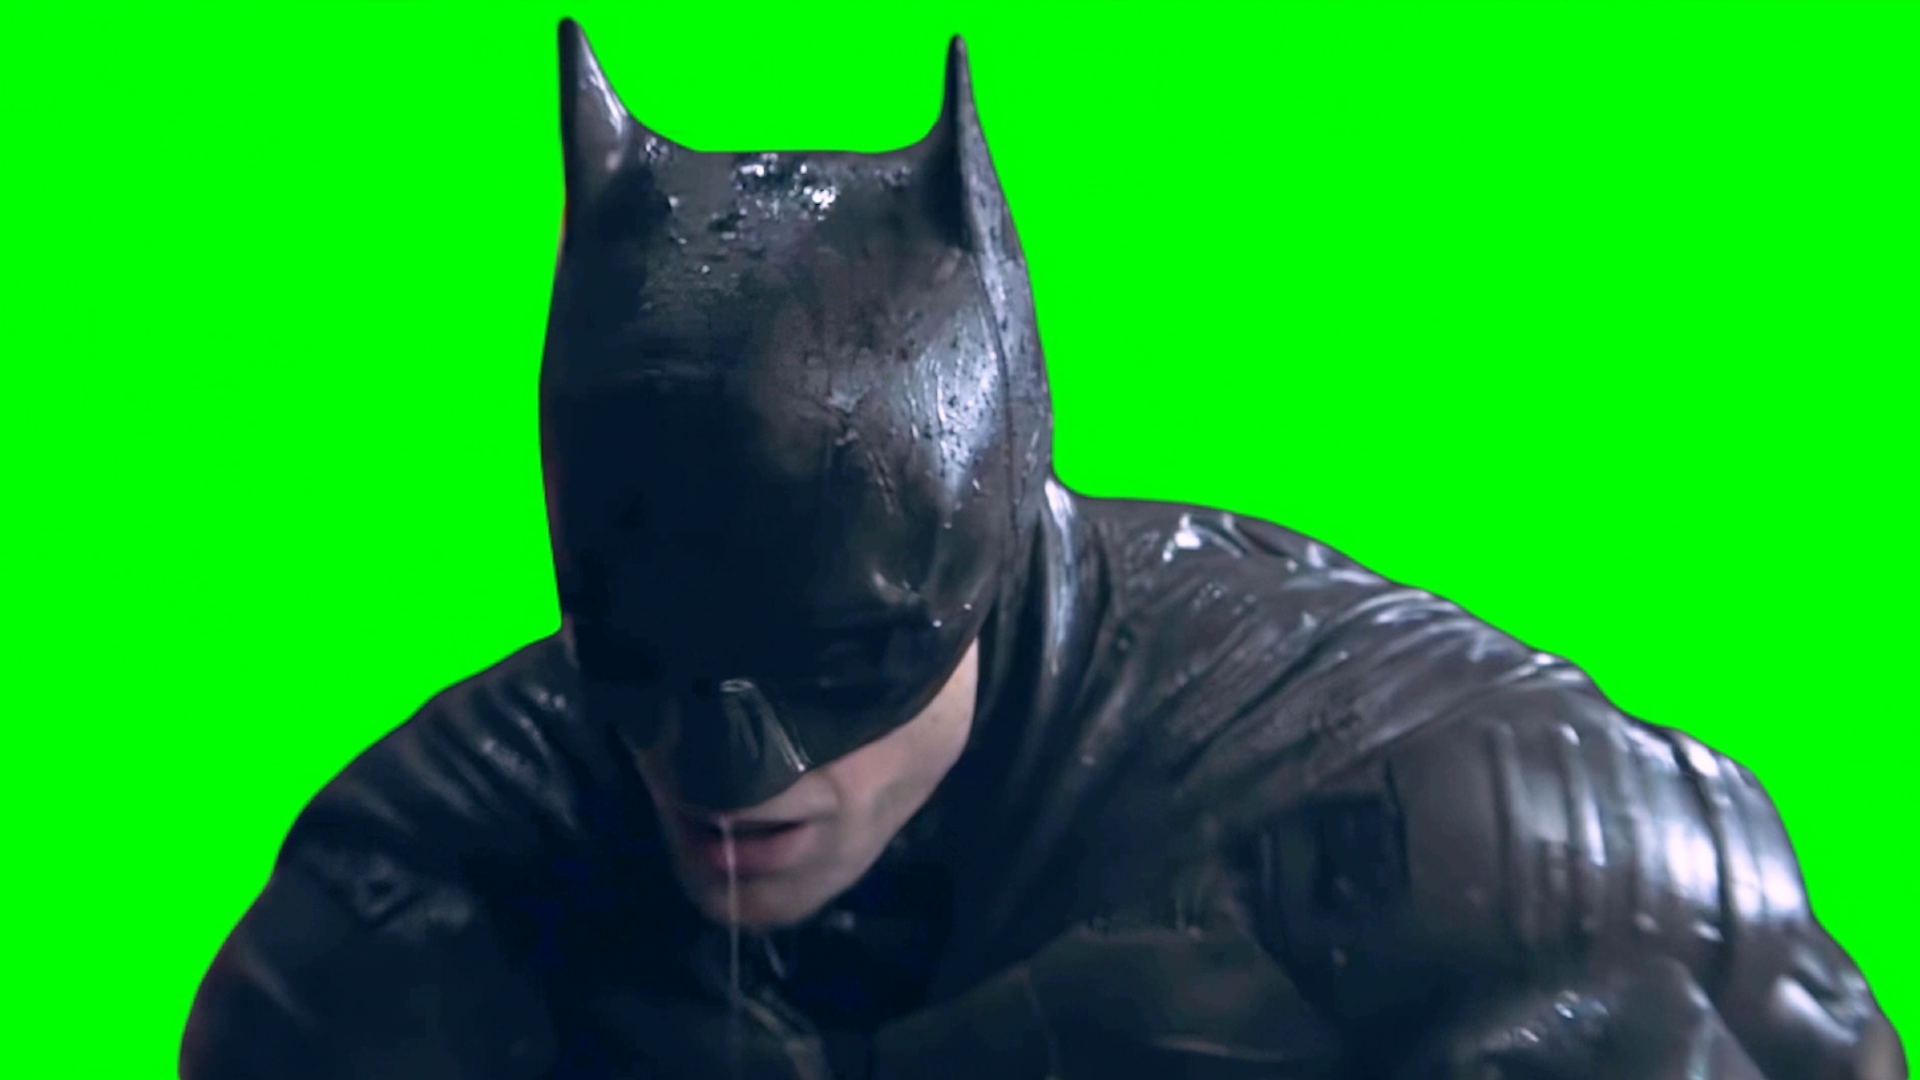 I'm Vengeance - Batman beating up thug meme (Green Screen)